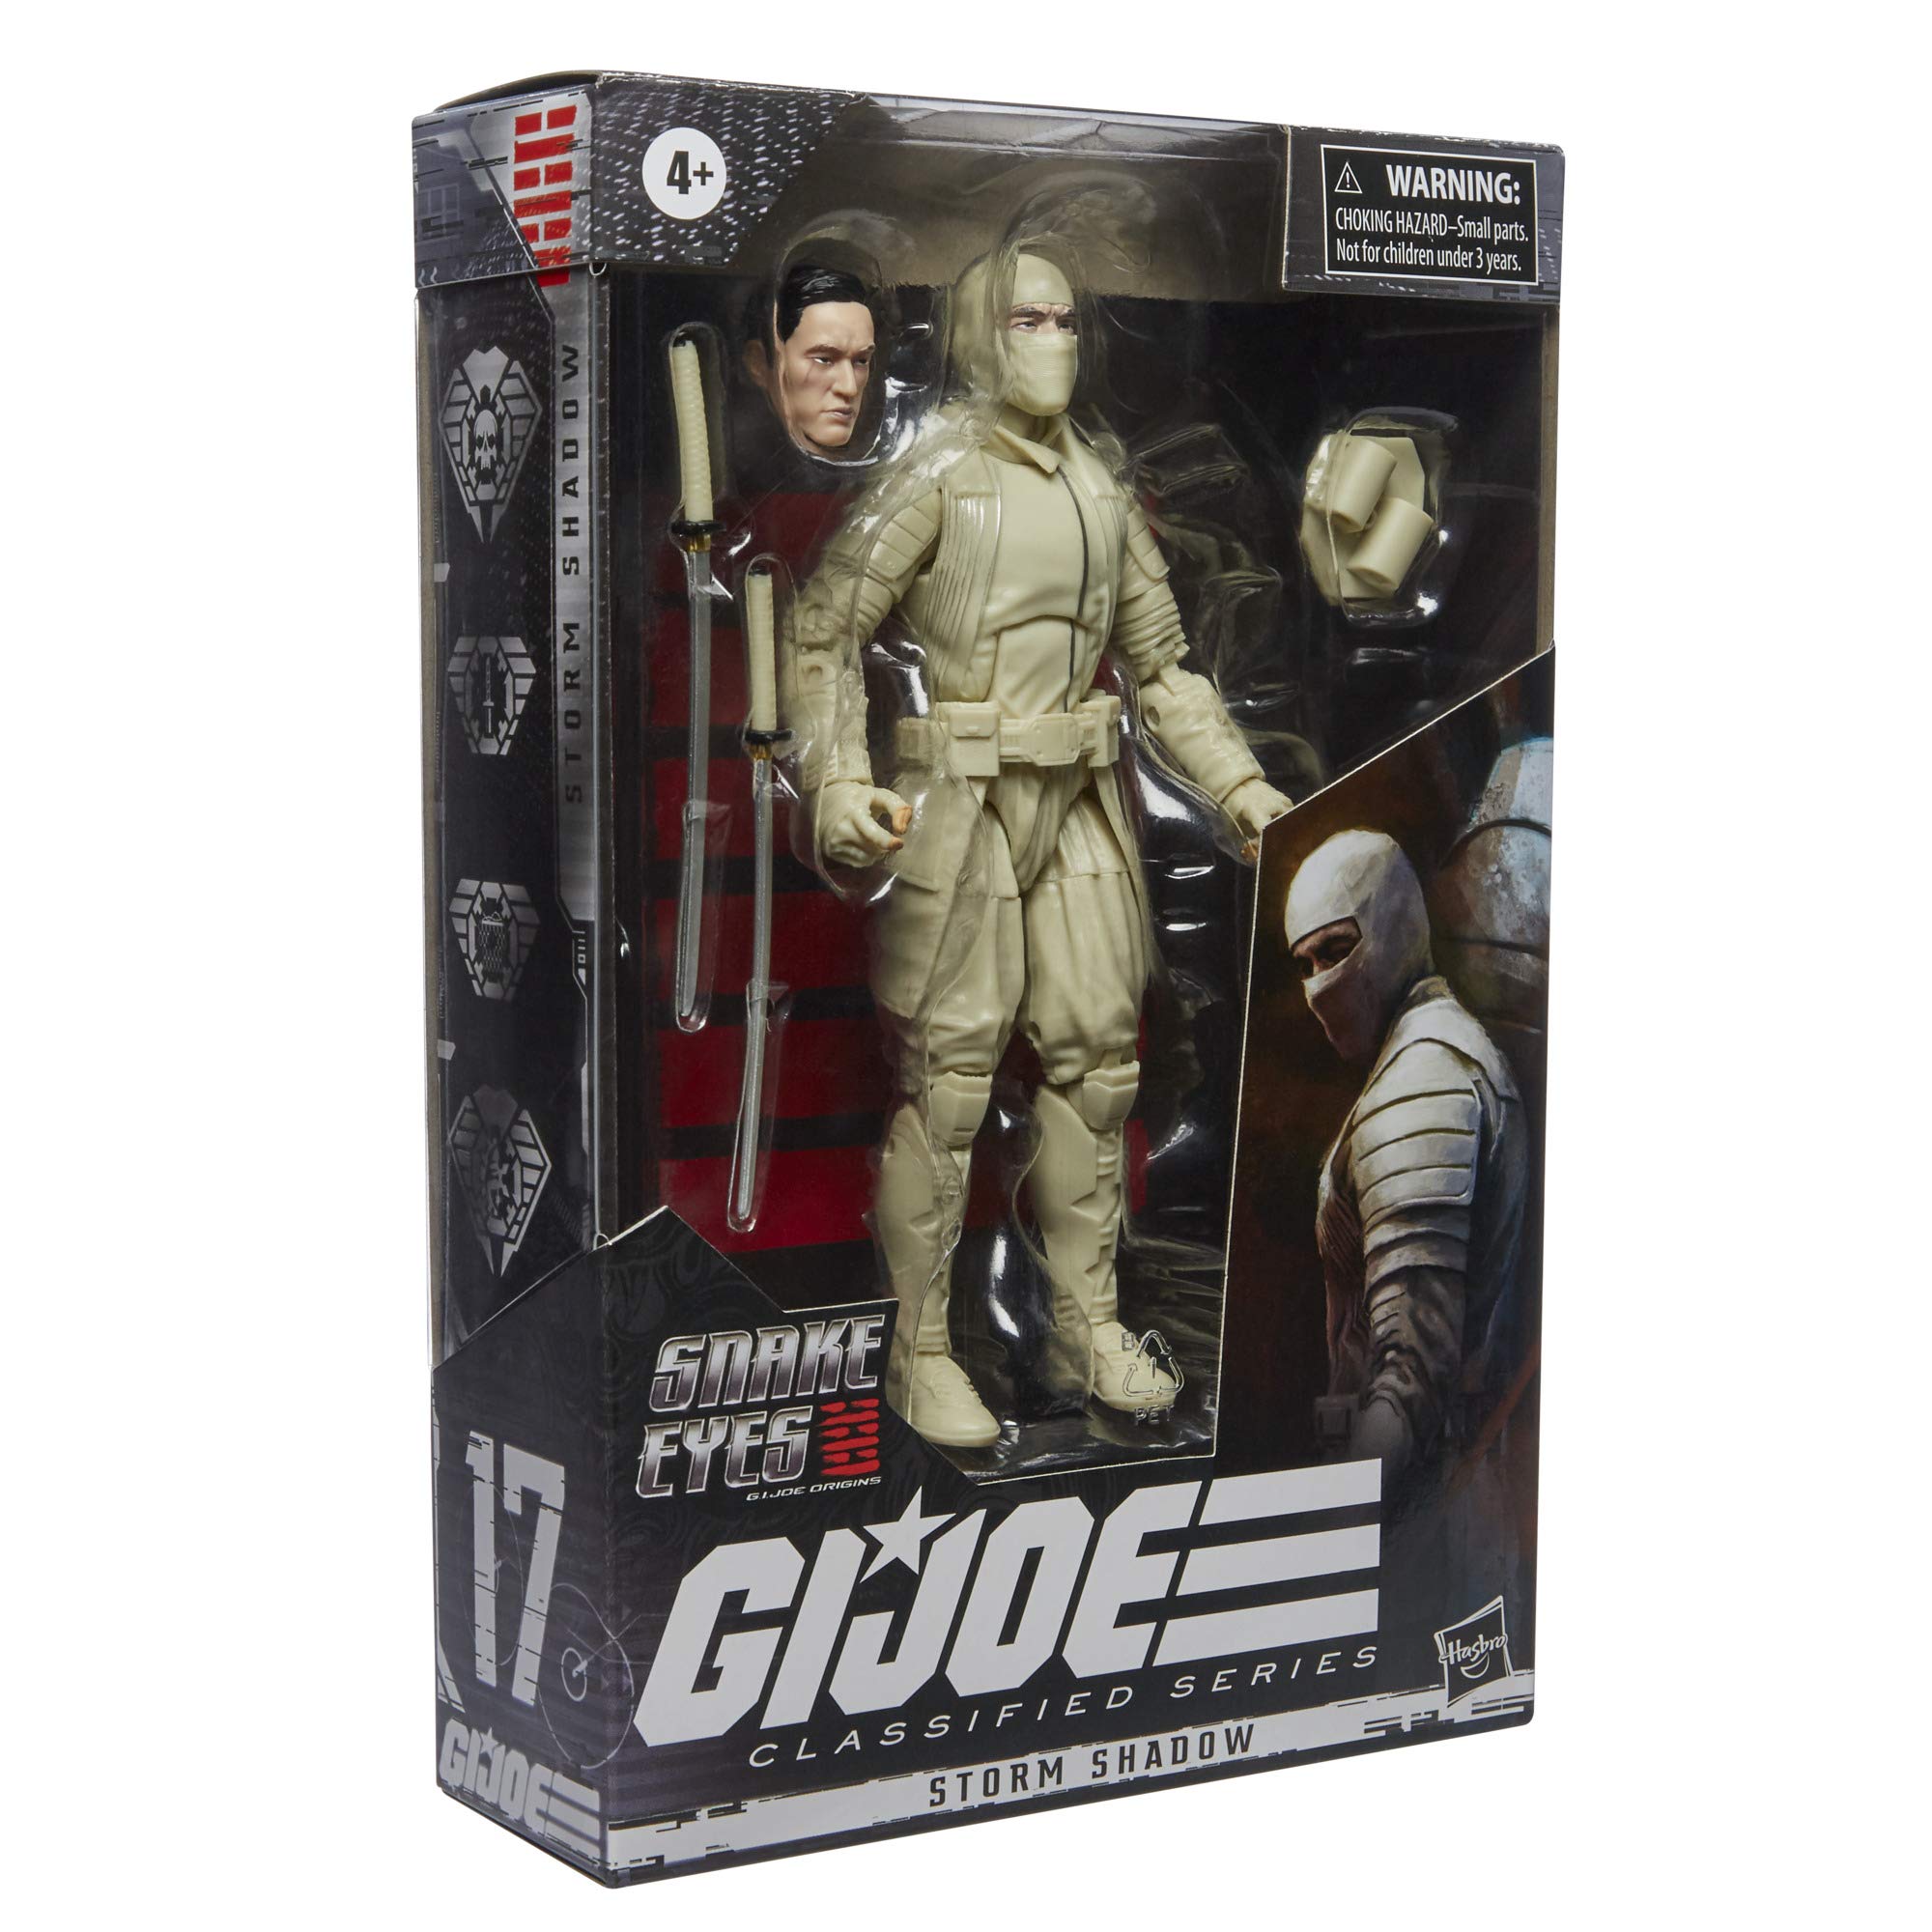 G.I. Joe Classified Series Snake Eyes: G.I. Joe Origins Storm Shadow Action Figure 17, Premium 6-Inch Scale Toy with Custom Package Art , White